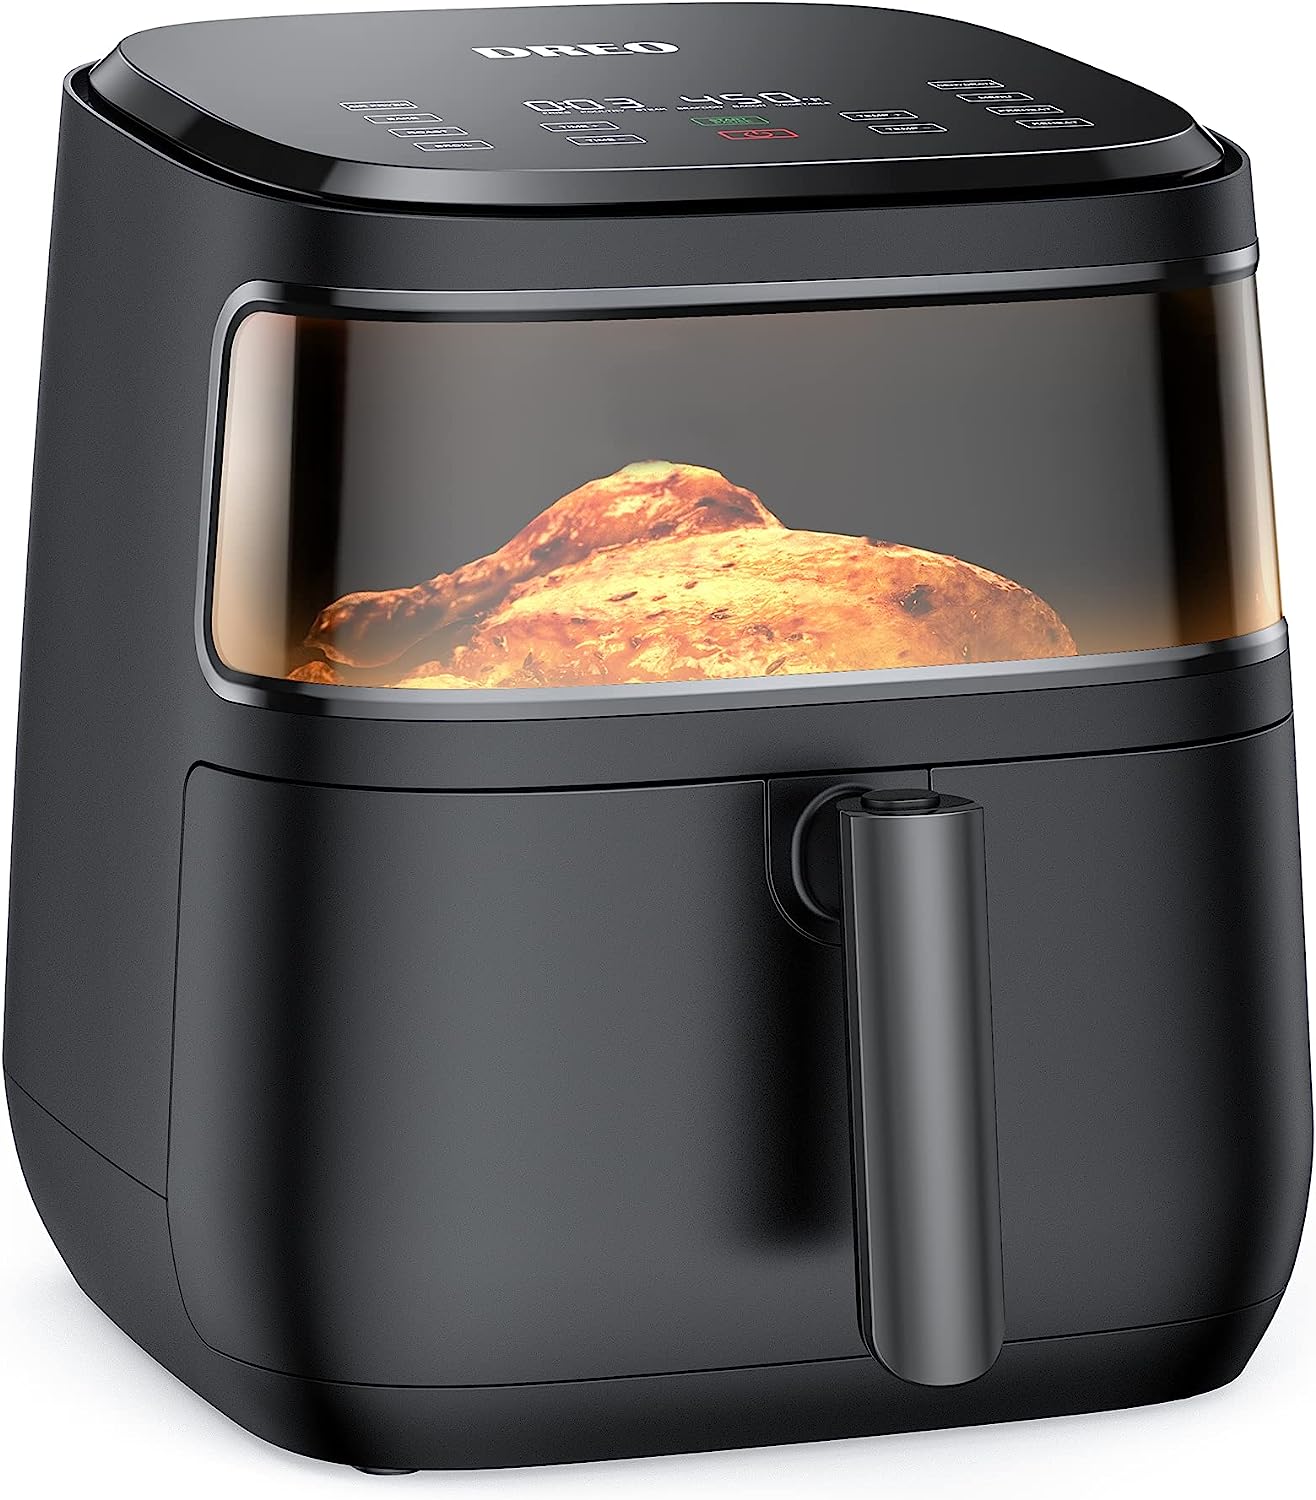 Dreo Air Fryer Pro Max, 11-in-1 Digital Air Fryer Oven [...]